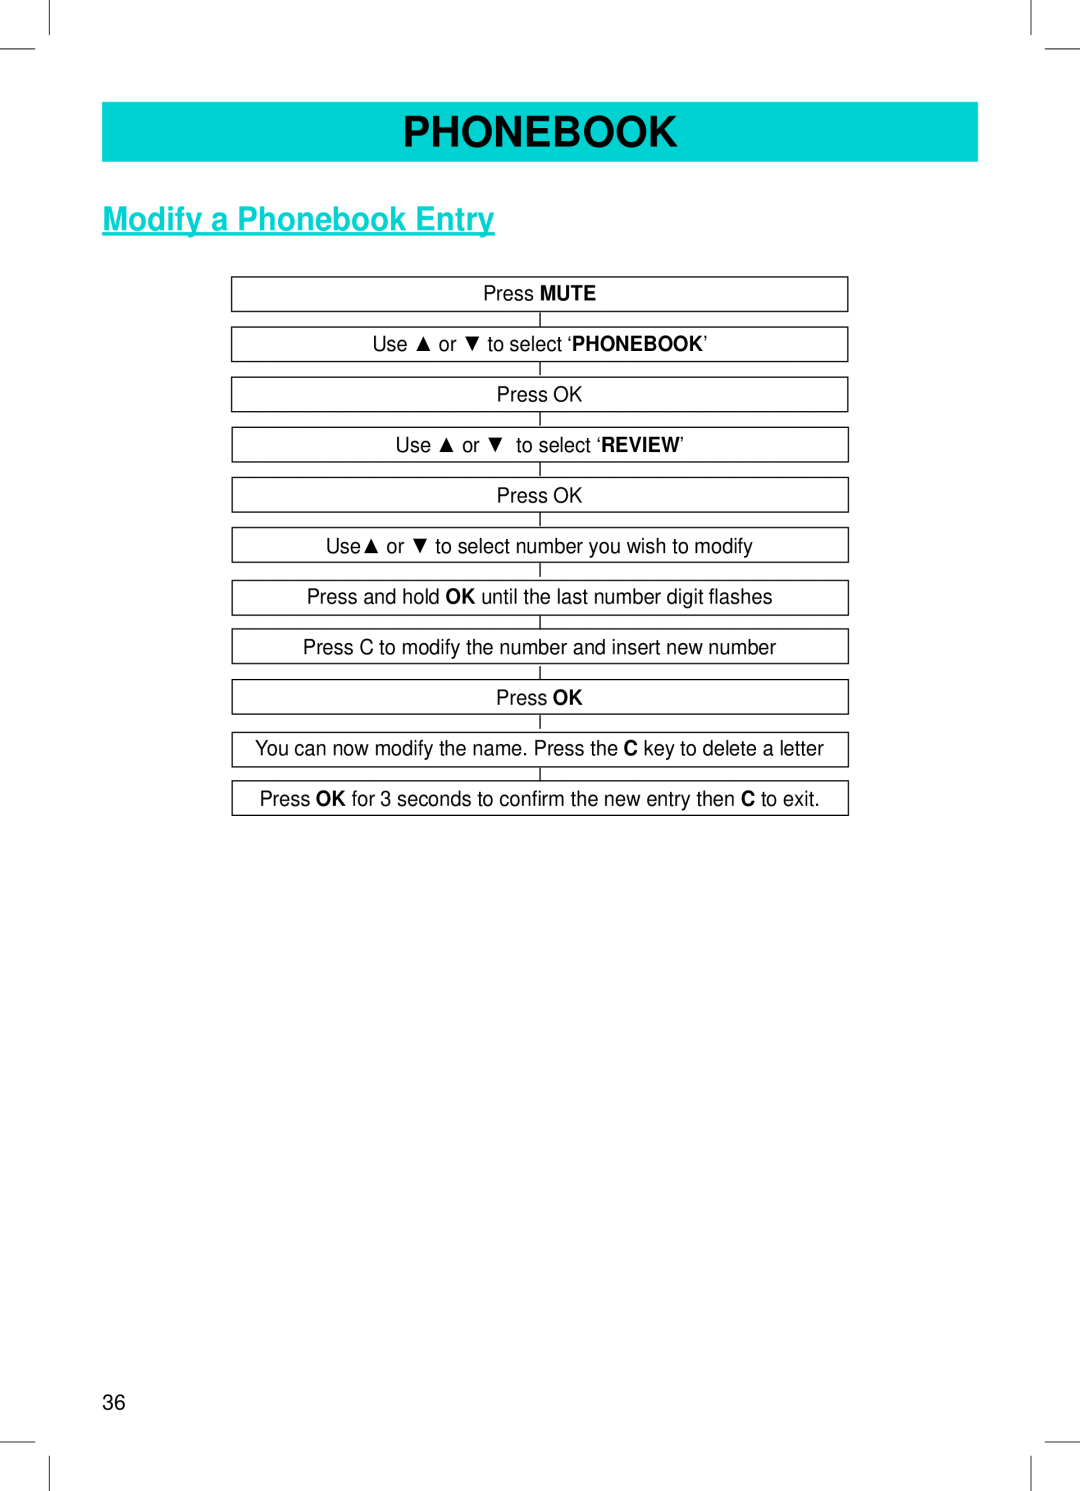 Geemarc AMPLI600 manual Modify a Phonebook Entry 